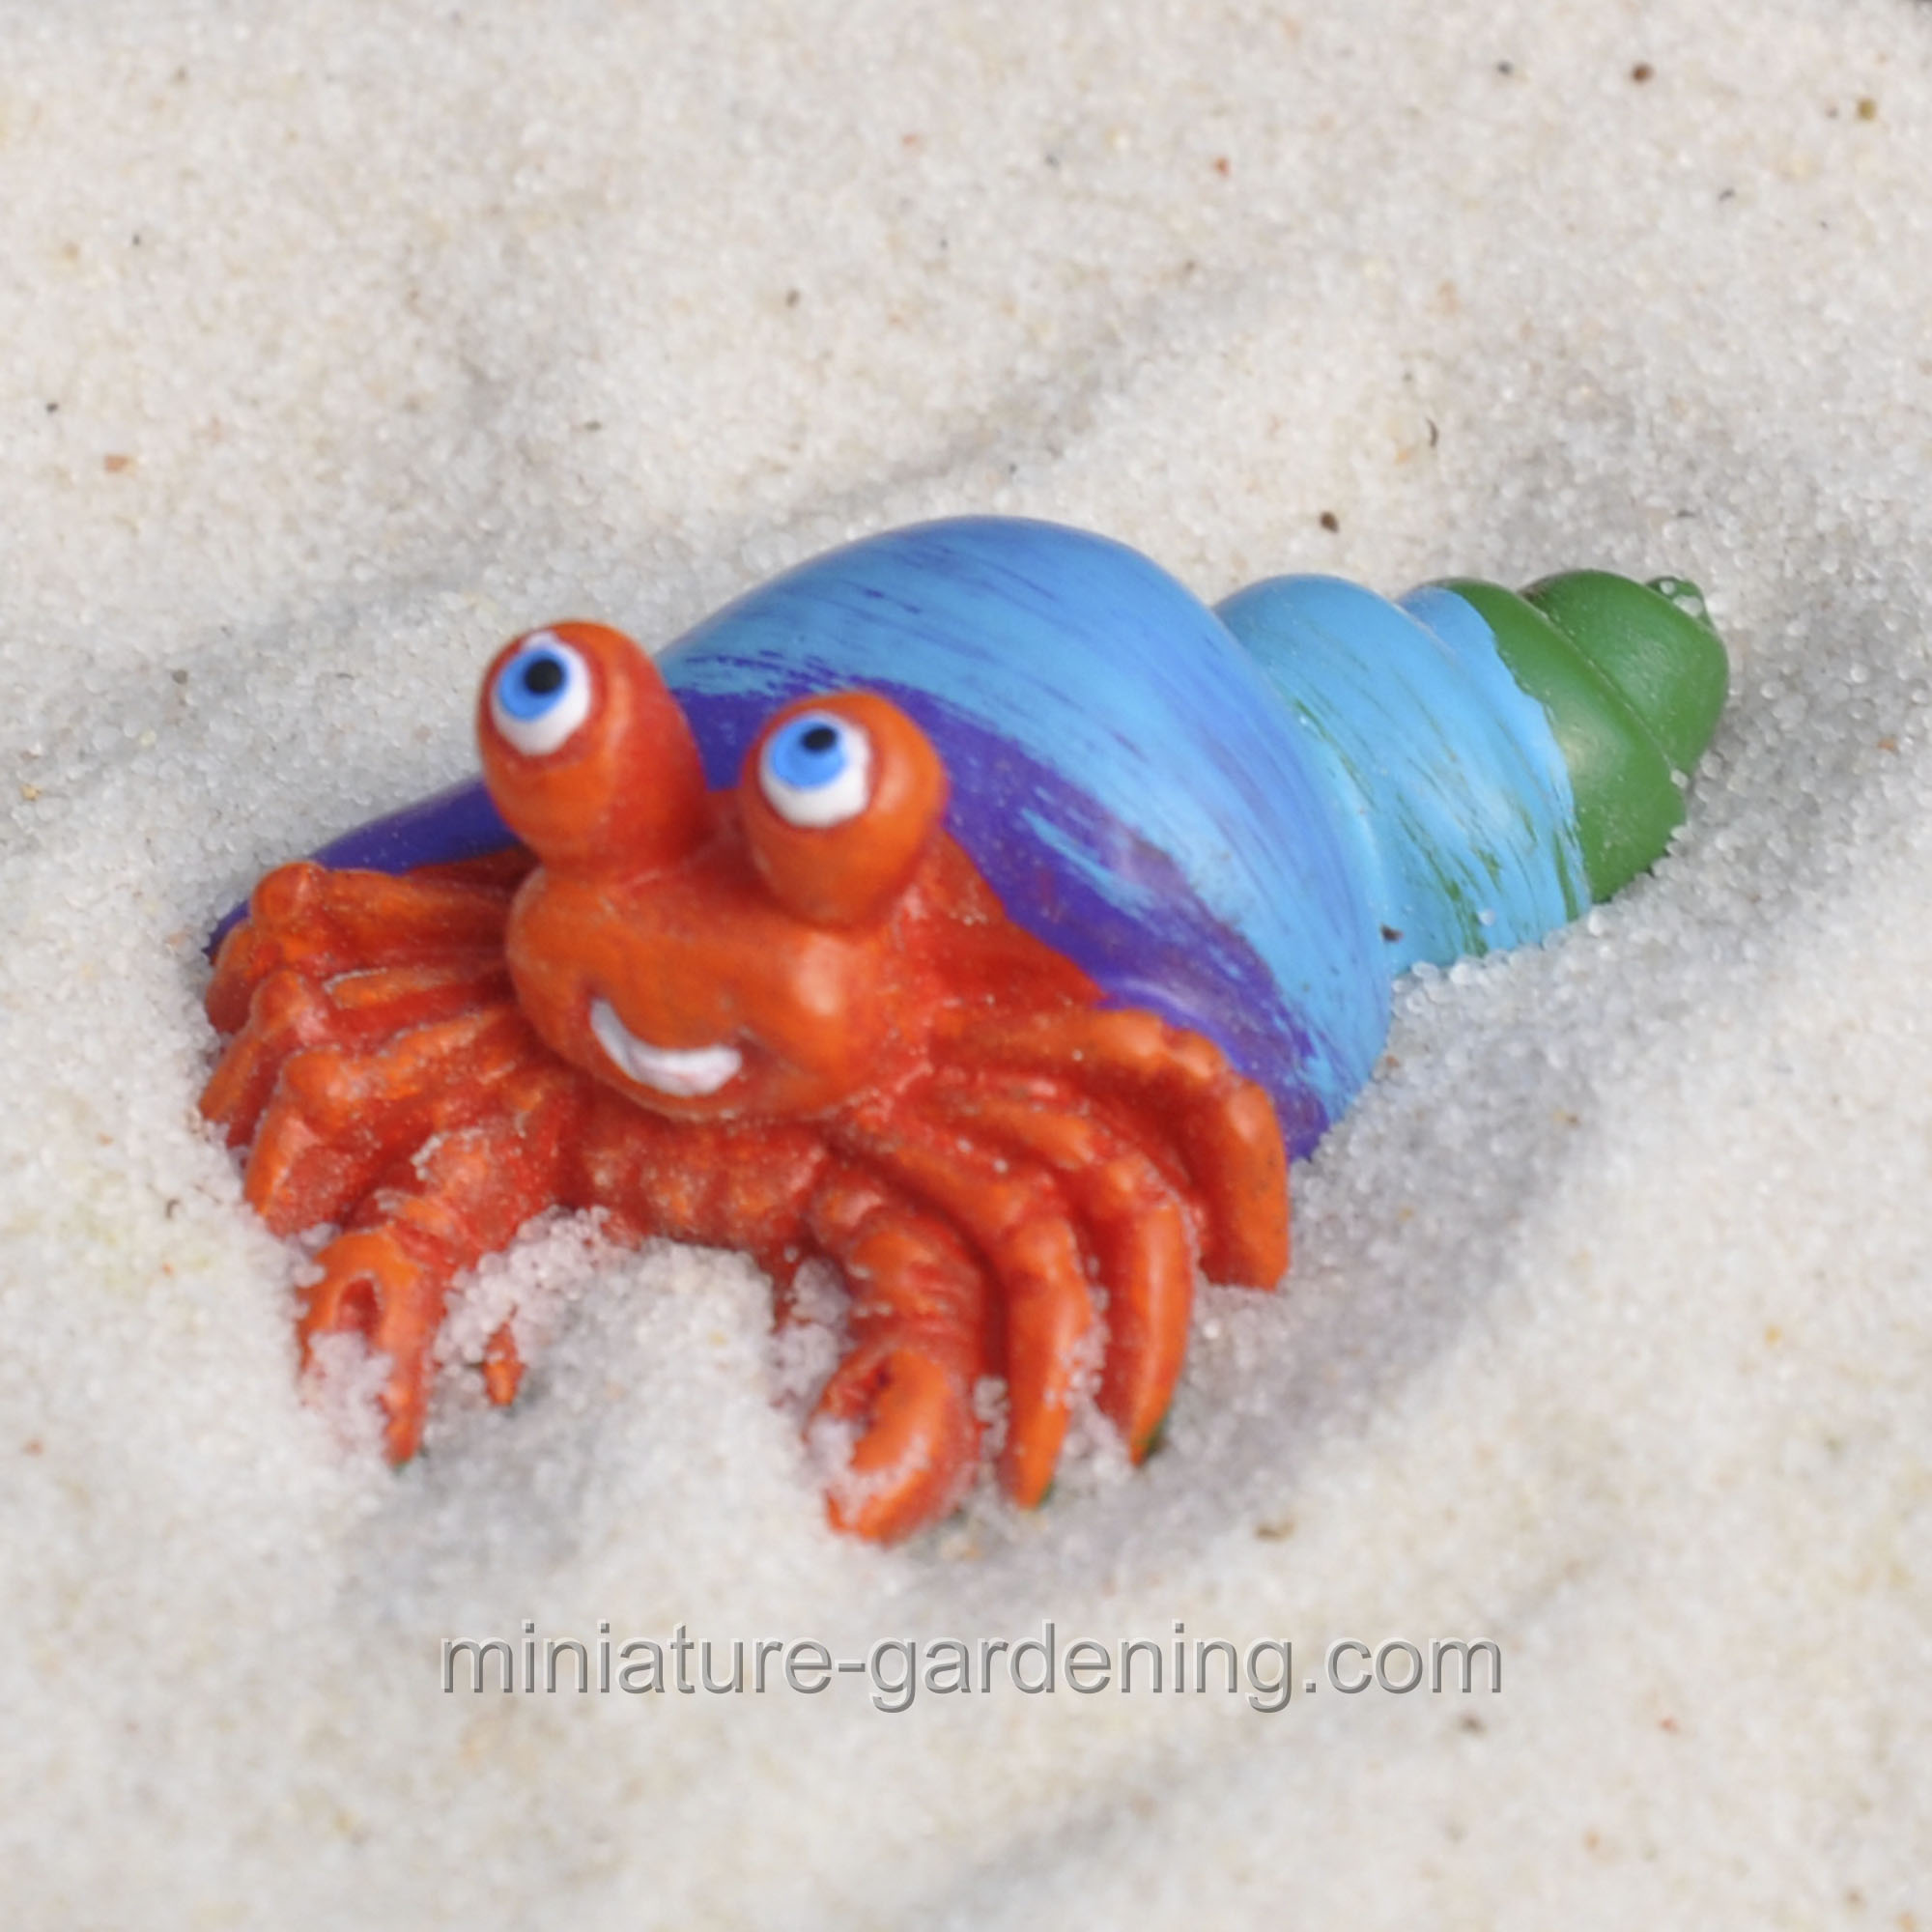 Miniature Gardening - Blue Shell Hermit Crab > $4.00